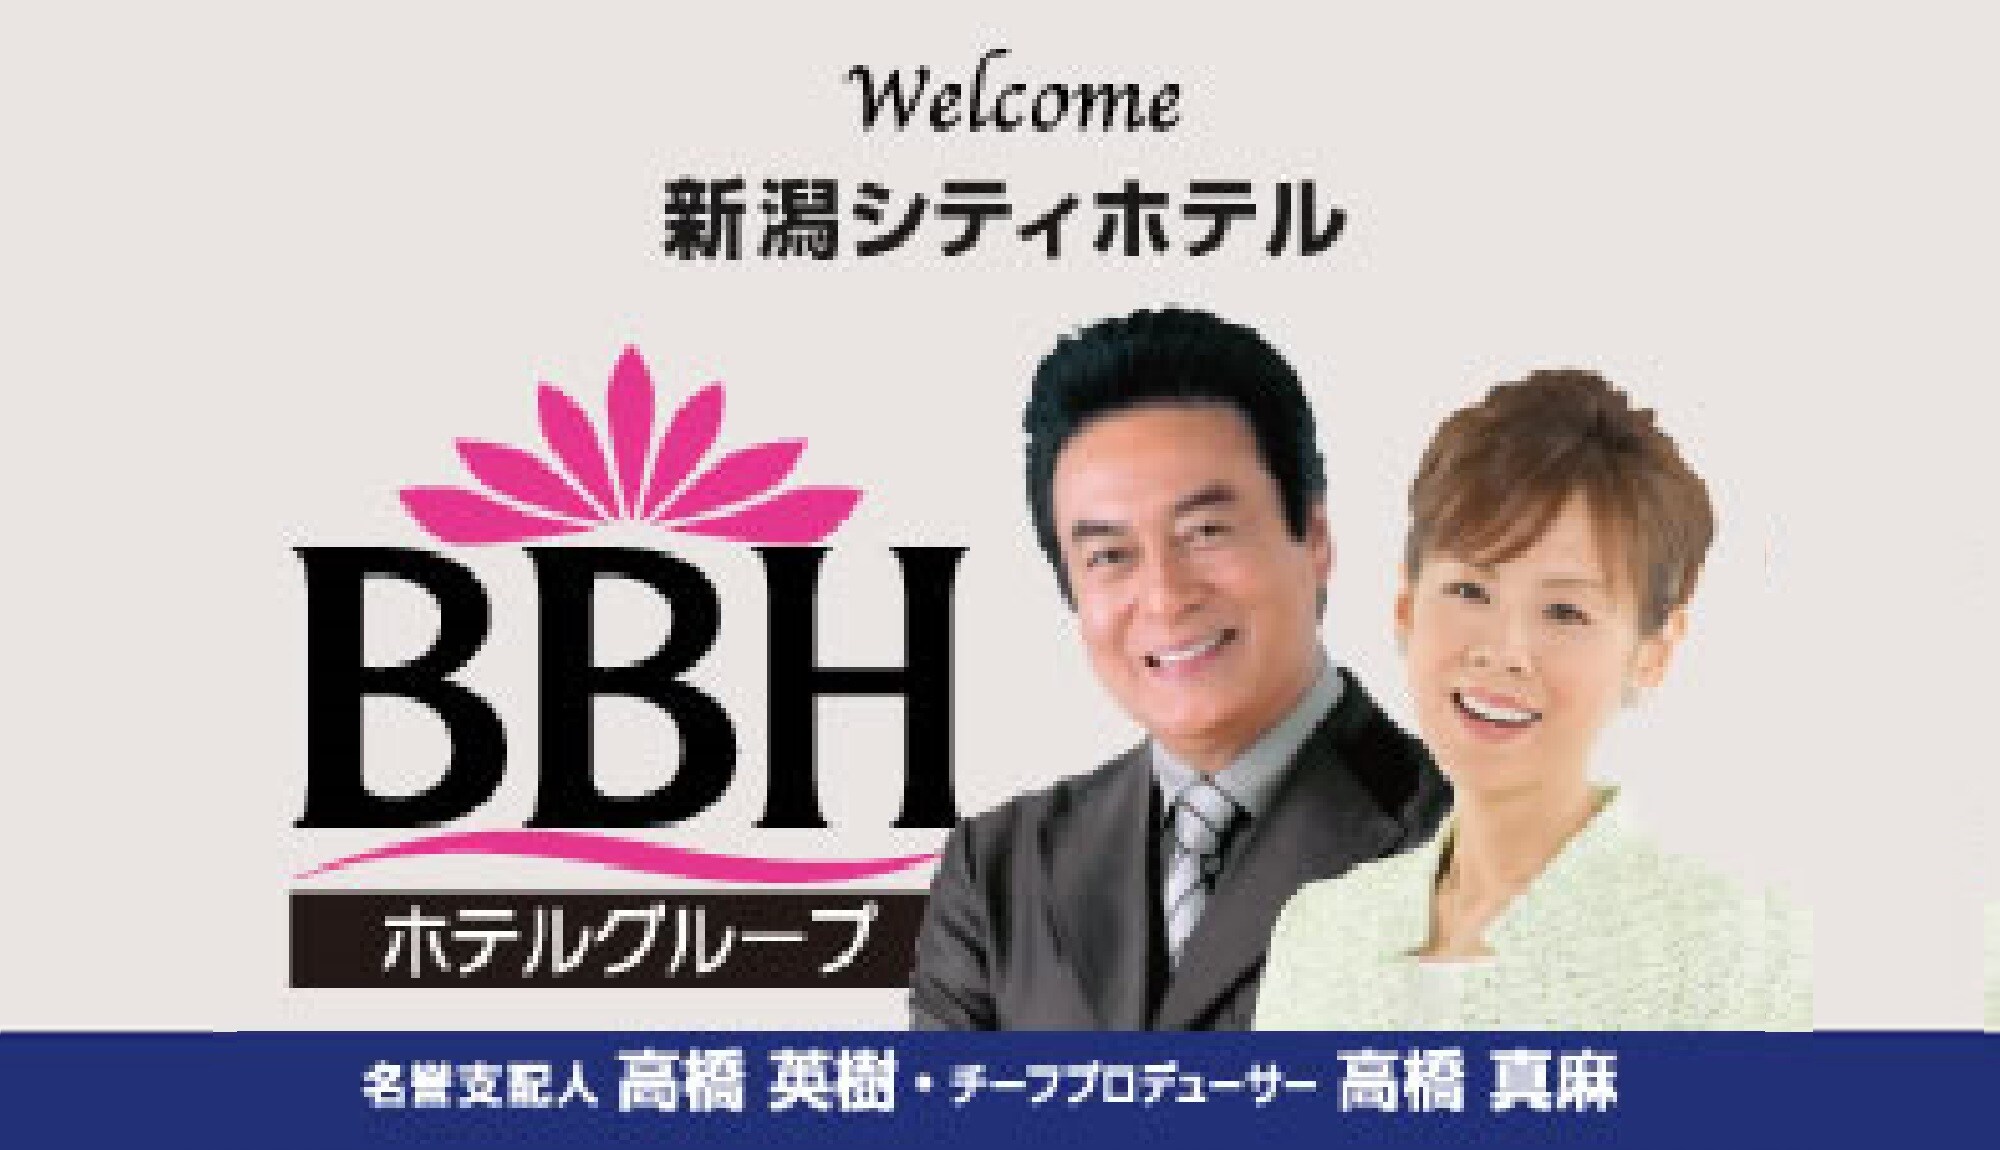 Breezbay Hotel Group Memperluas Manajer Kehormatan nasional Hideki Takahashi & Kepala Produser Maasa Takahashi